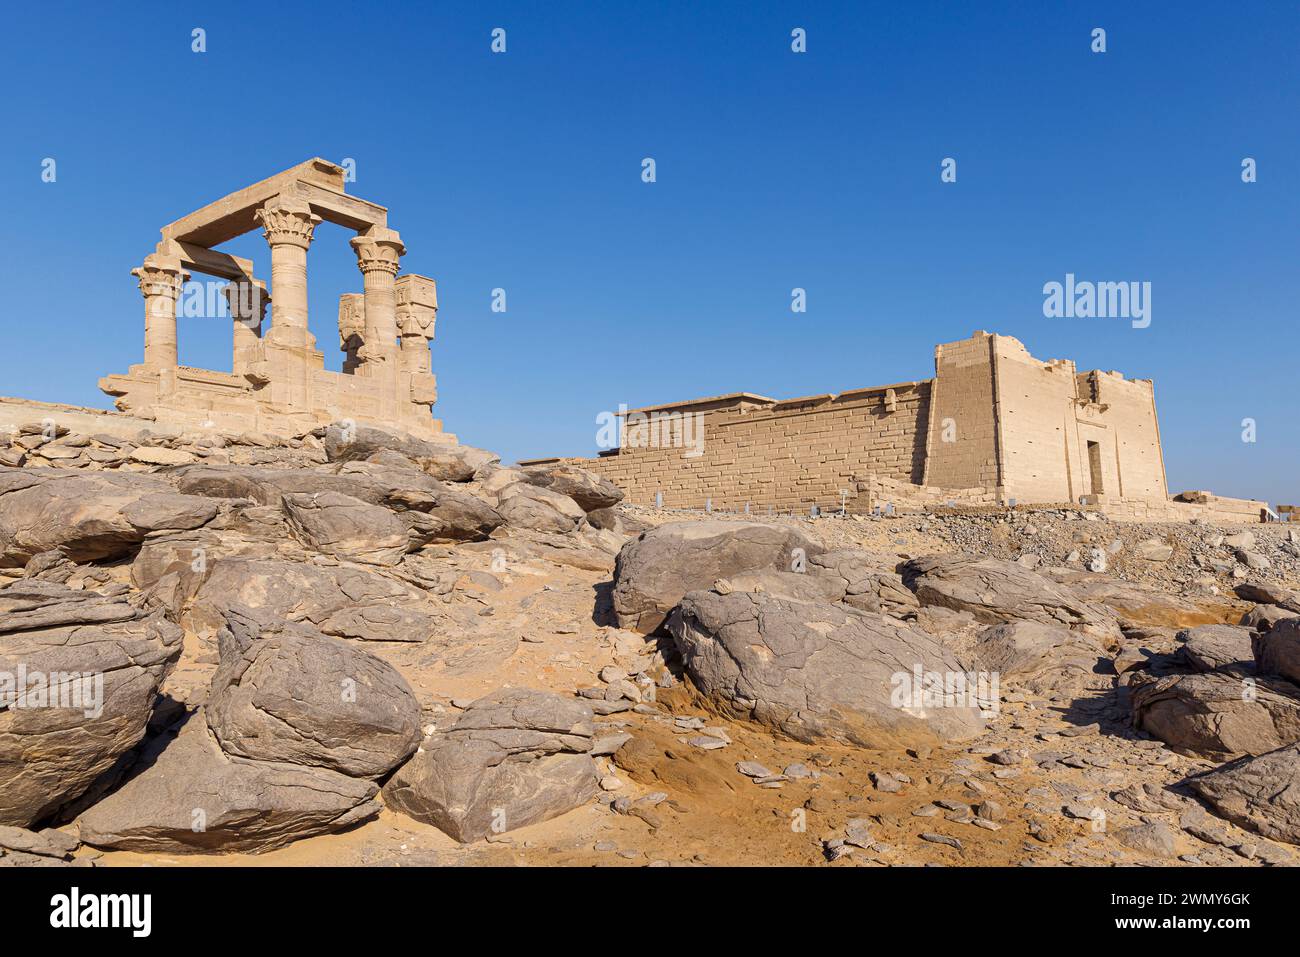 Egitto, Assuan, monumenti nubiani da Abu Simbel a file, patrimonio mondiale dell'UNESCO, chiosco Qertassi e tempio Kalabsha Foto Stock